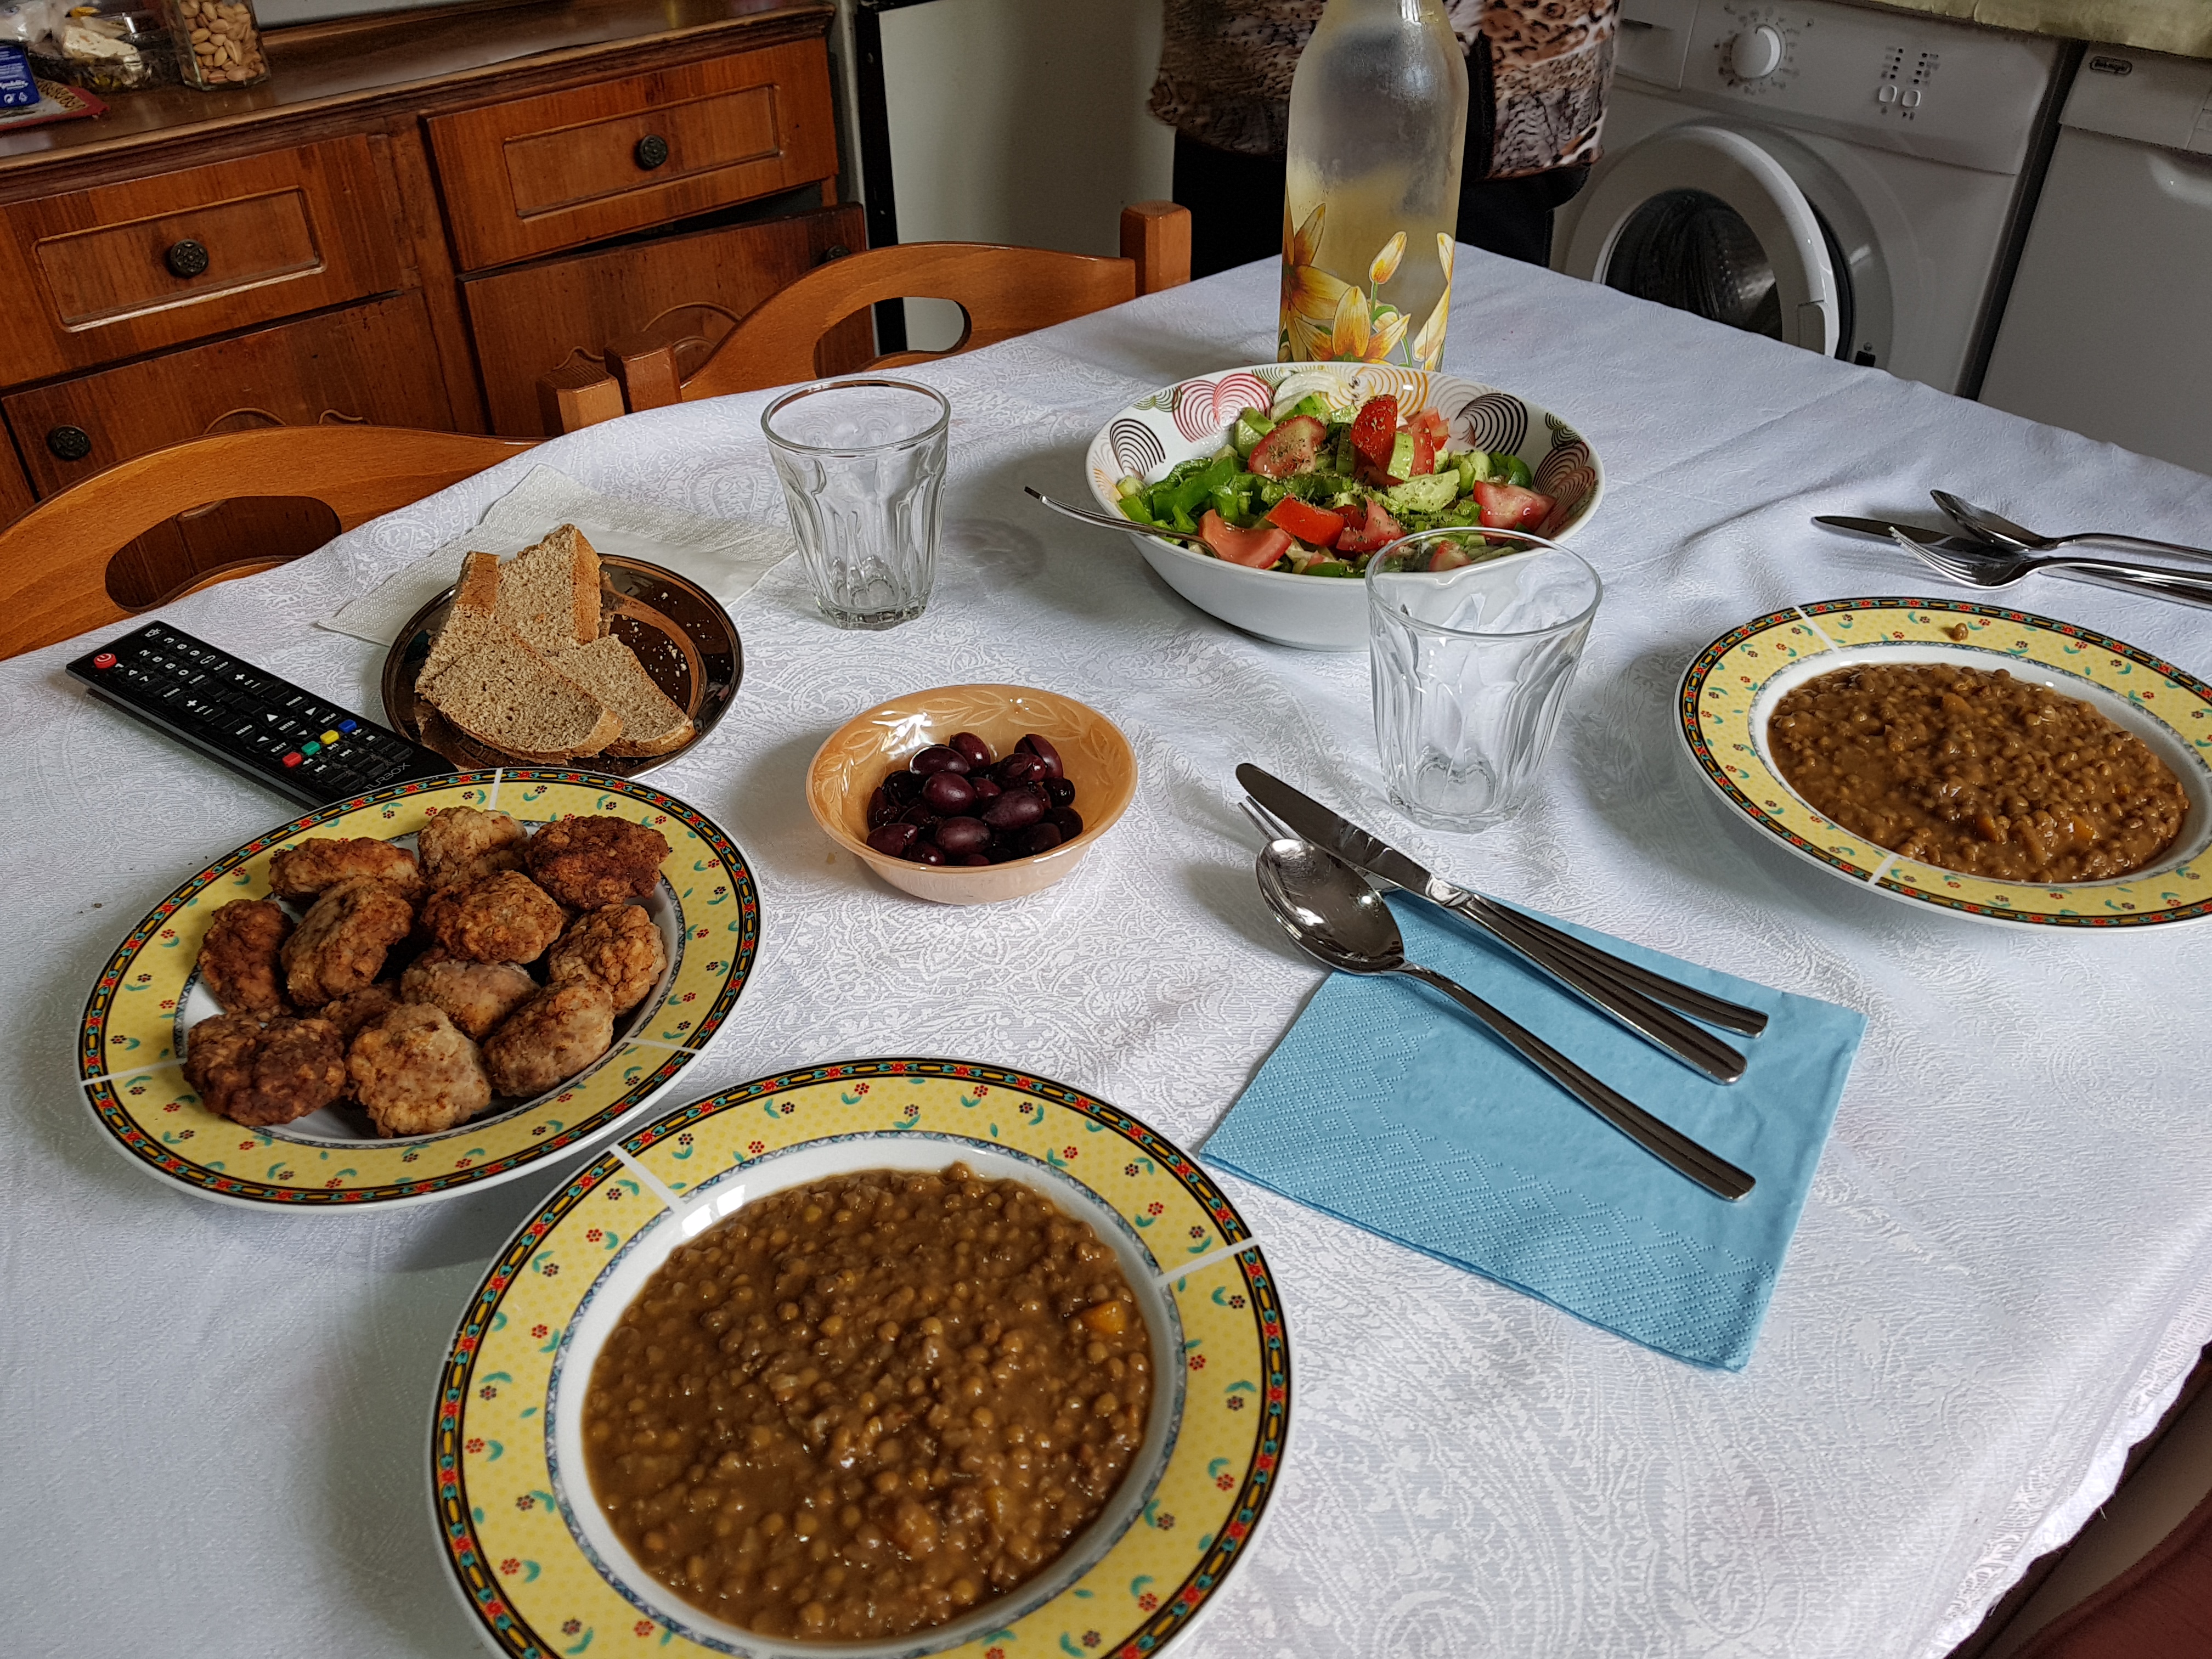 Lunch Of Lentil Stew, Meatballs and Greek Salad